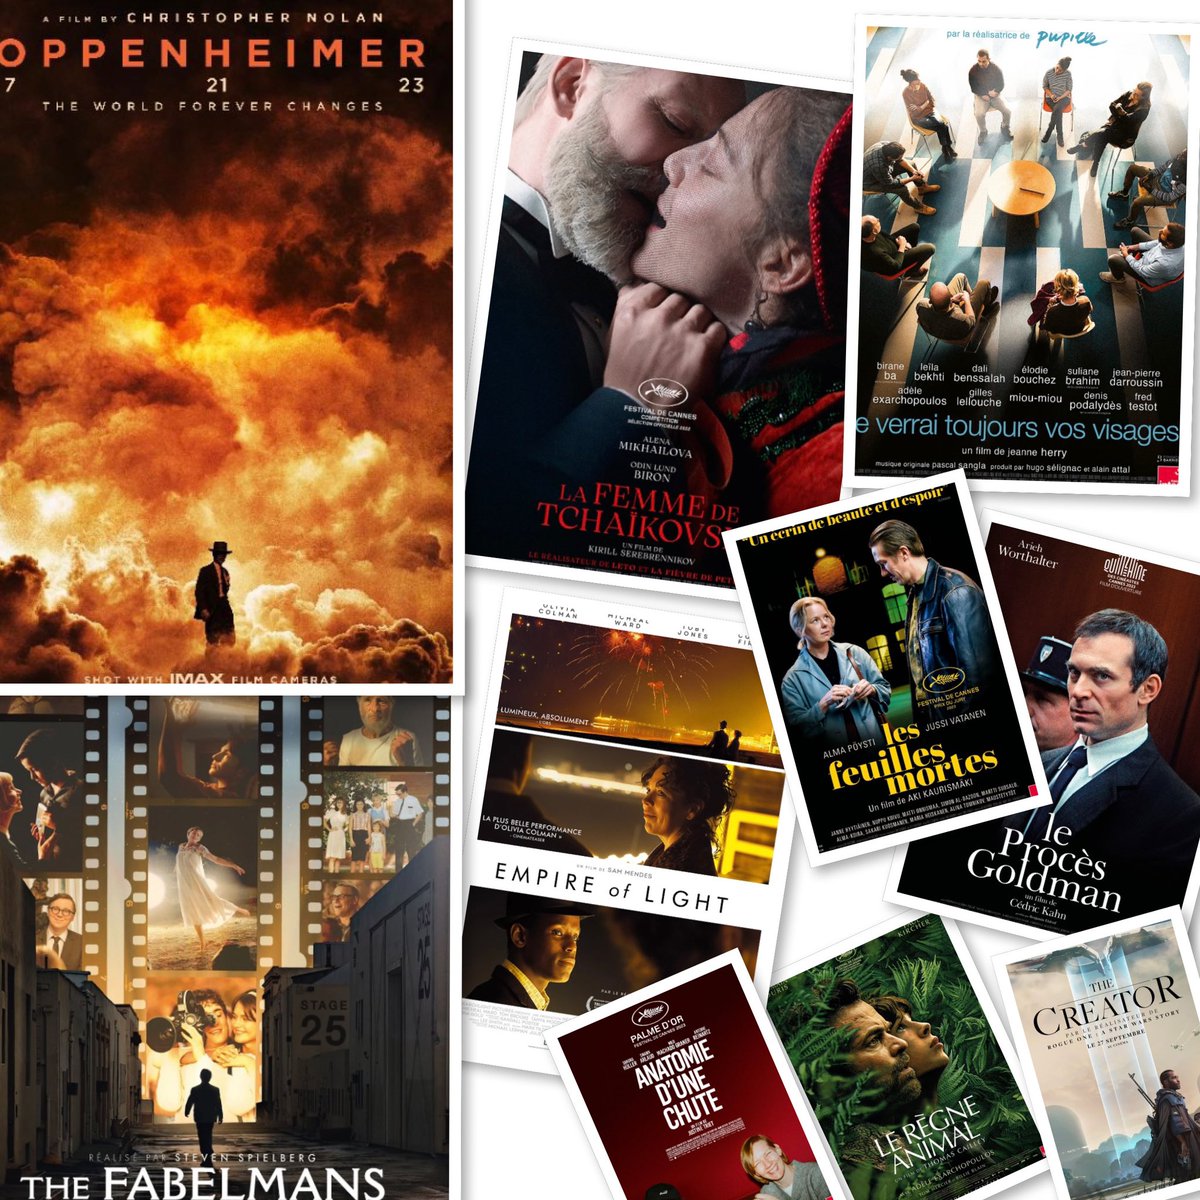 Mon top 10 cinéma 2023
1ex æquo : 
#Oppenheimer 
#TheFabelmans 
3 :  #LepousedeTchaikovsky 
4 : #EmpireOfLight 
5 : #jeverraitoujoursvosvisages 
6 : #lesfeuillesmortes 
7 : #leprocesgoldman 
8 : #AnatomieDUneChute 
9 : #LeRegneAnimal 
10: #TheCreator